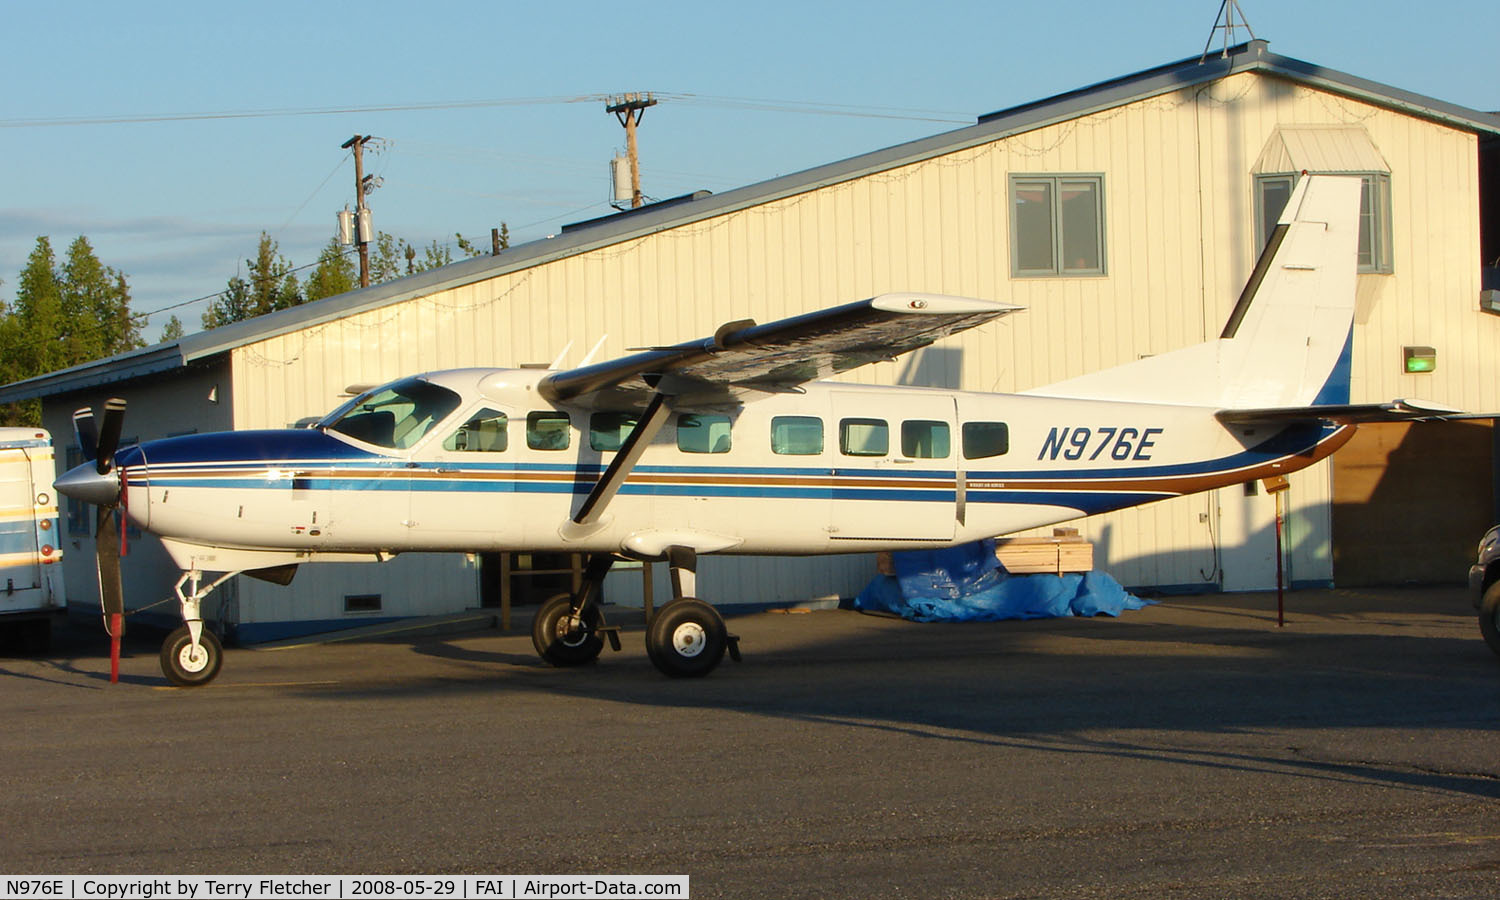 N976E, 2002 Cessna 208B C/N 208B0976, Cessna Caravan of Wright Air Services at Fairbanks East